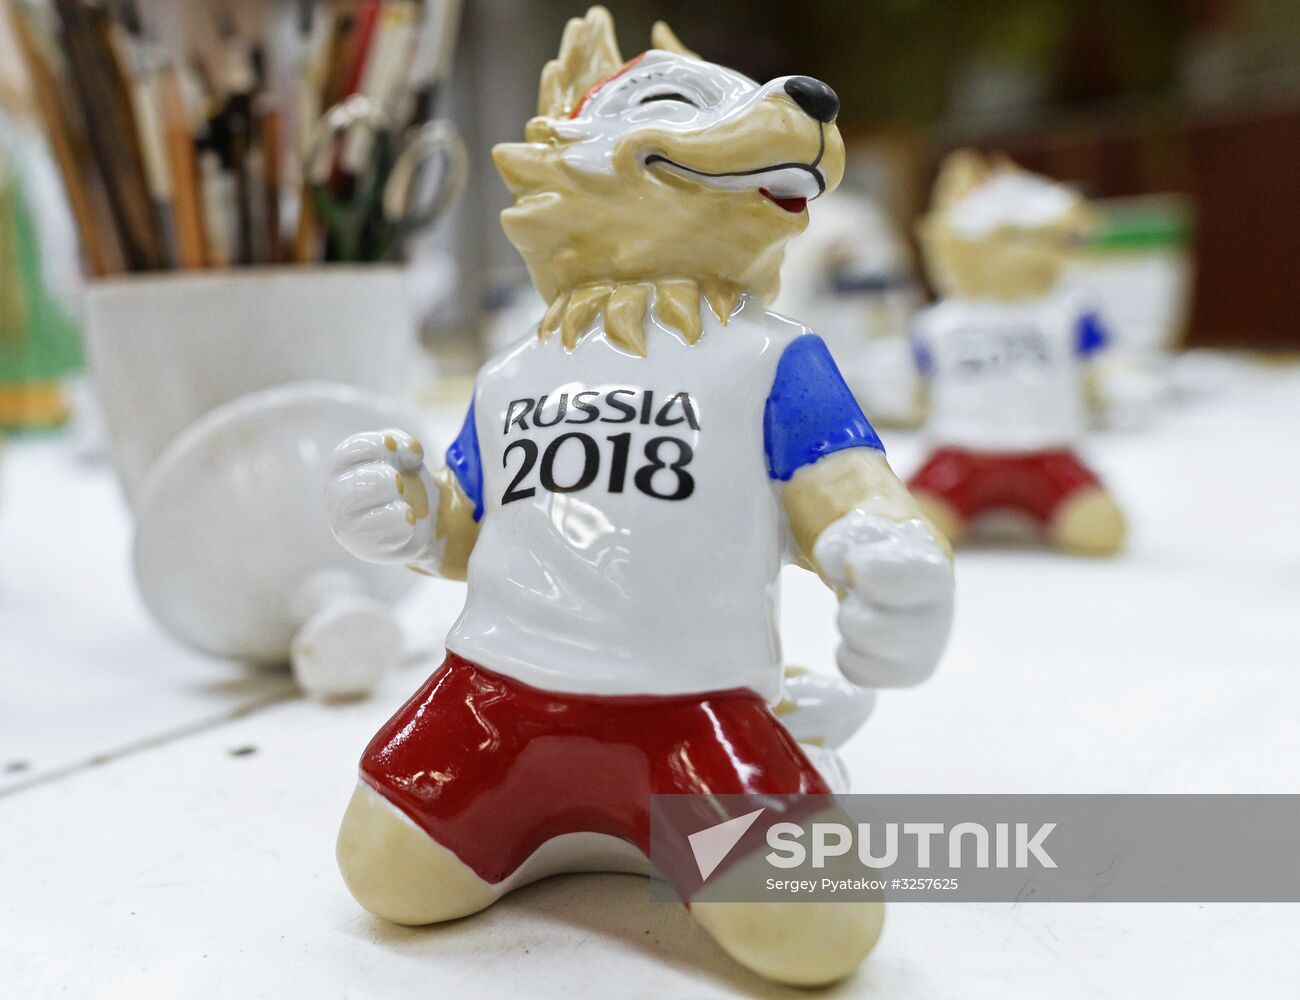 2018 FIFA World Cup Russia merch manufacturing